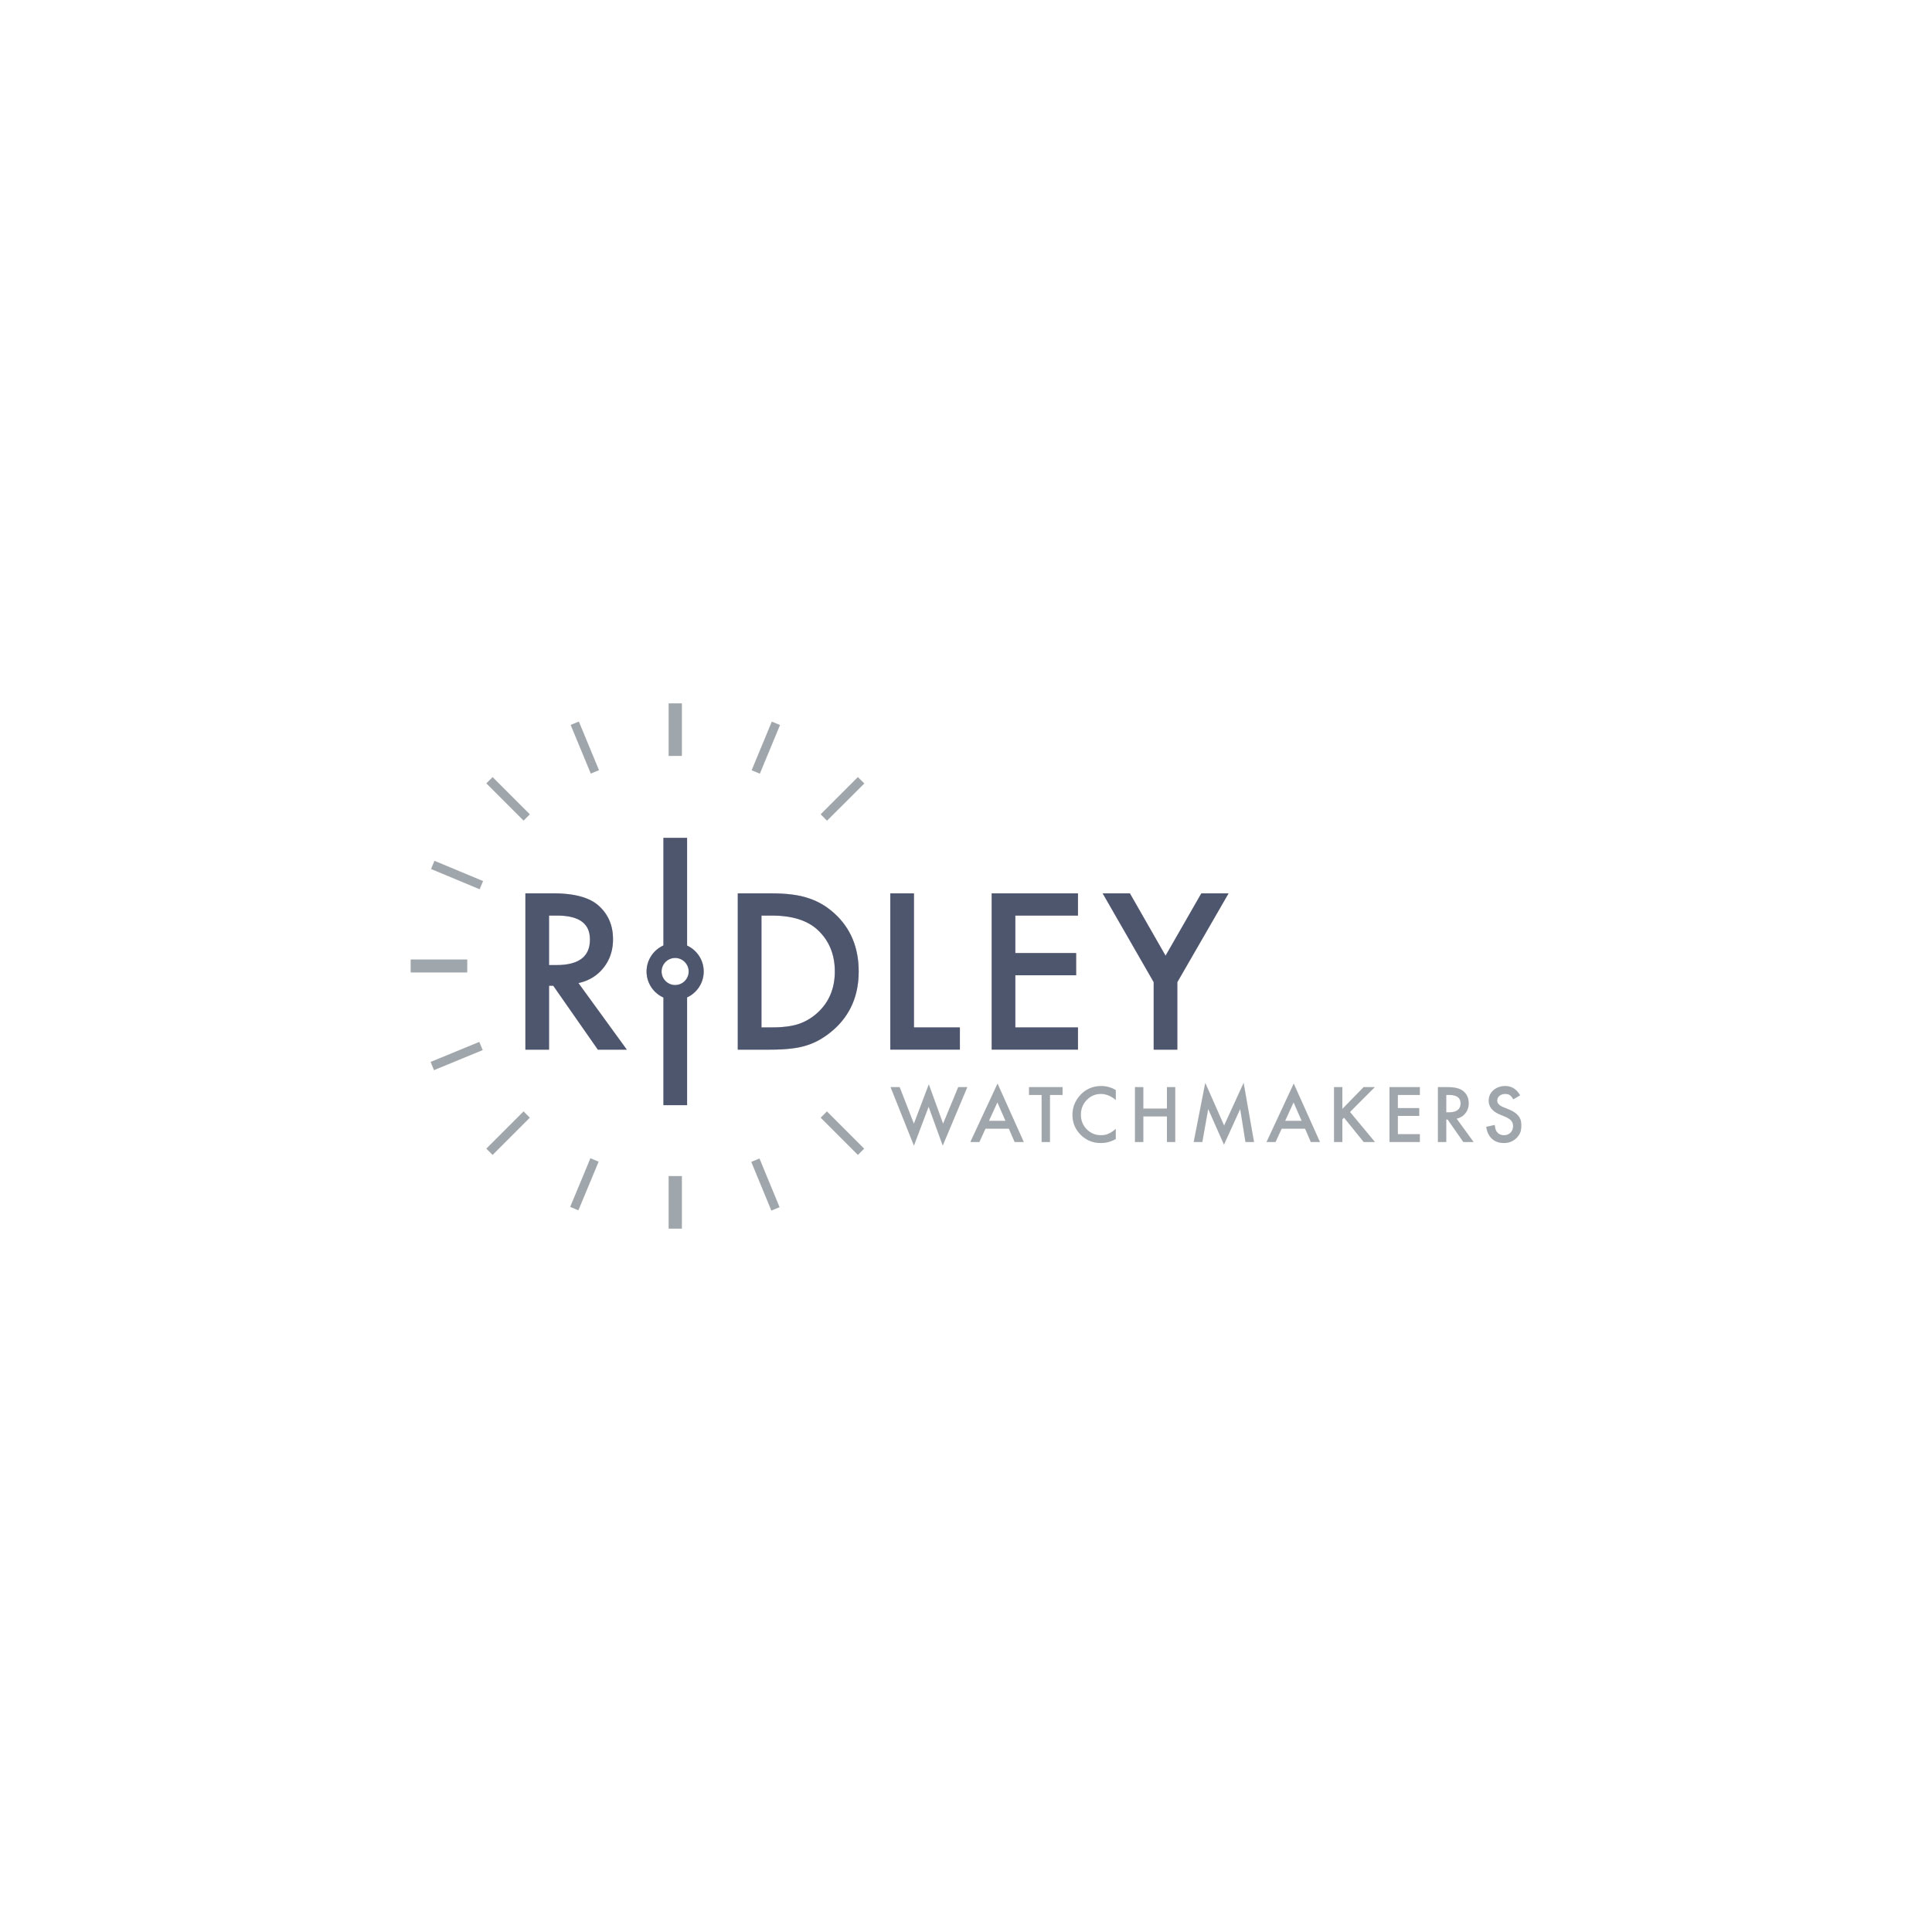 OldWestCreative_Work_Logos_RidleyWatchmakers